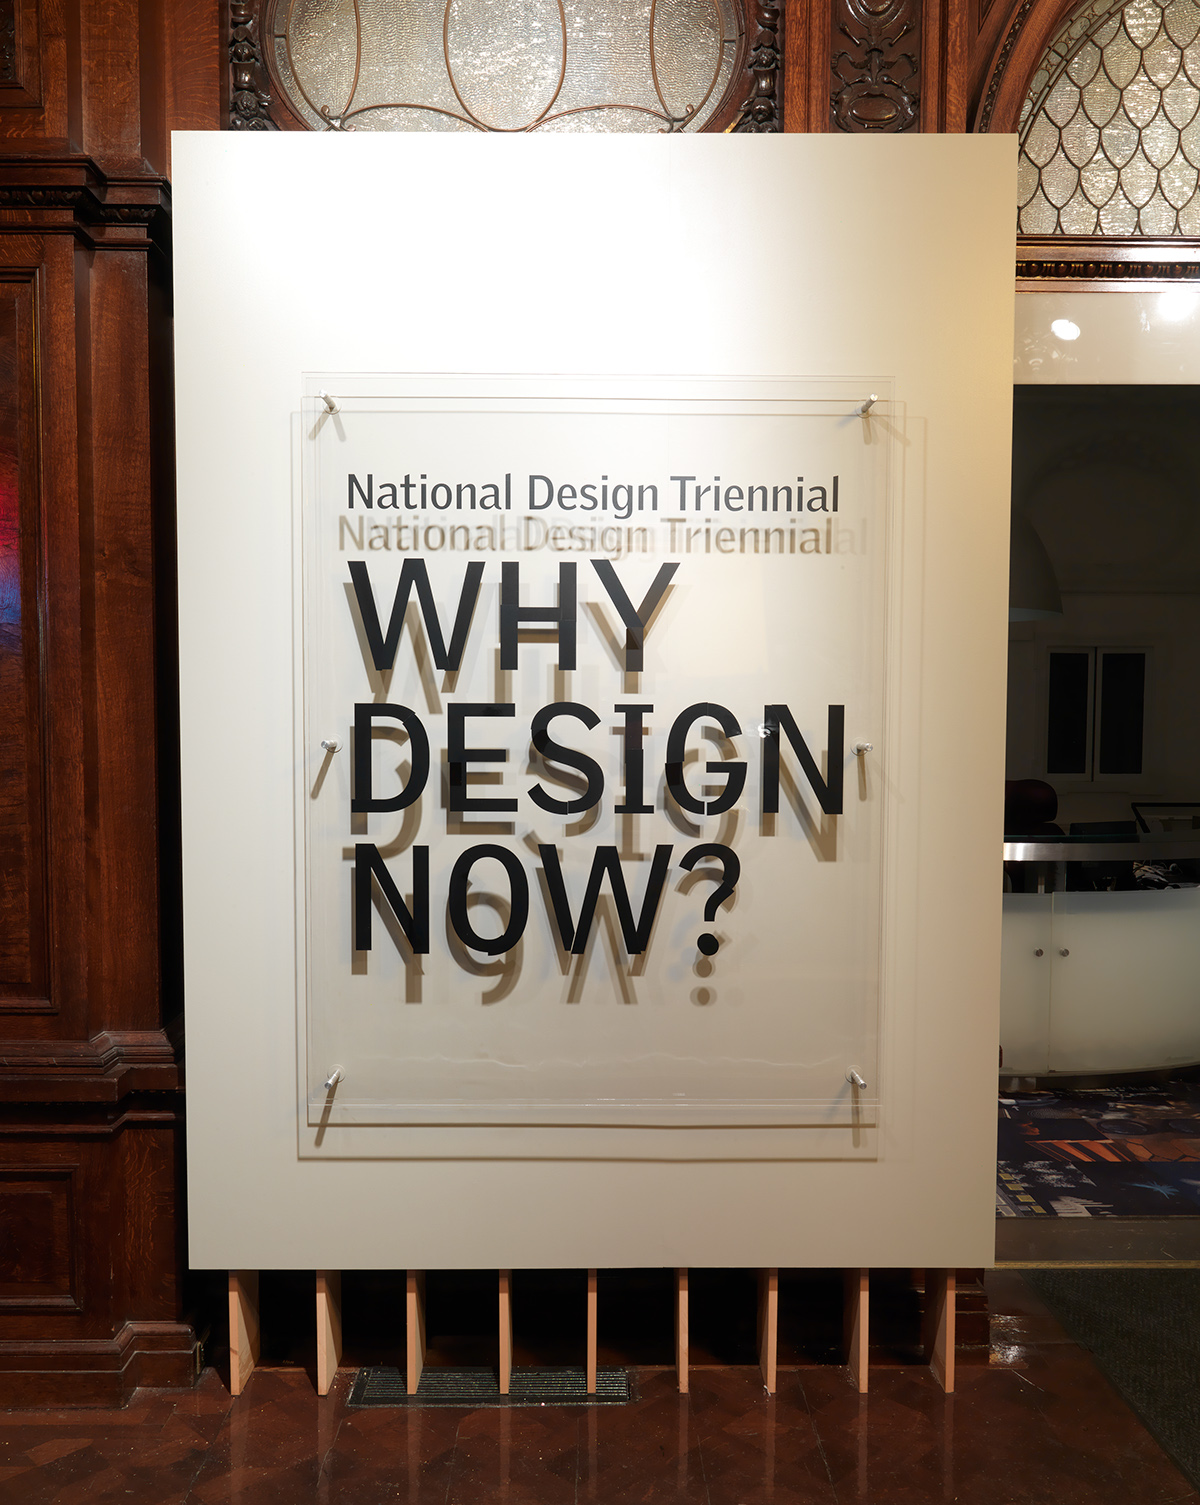 Design Triennial  ellen lupton  Design Museum  Matilda McQuid  Cynthia Smith  curation  event design  event marketing